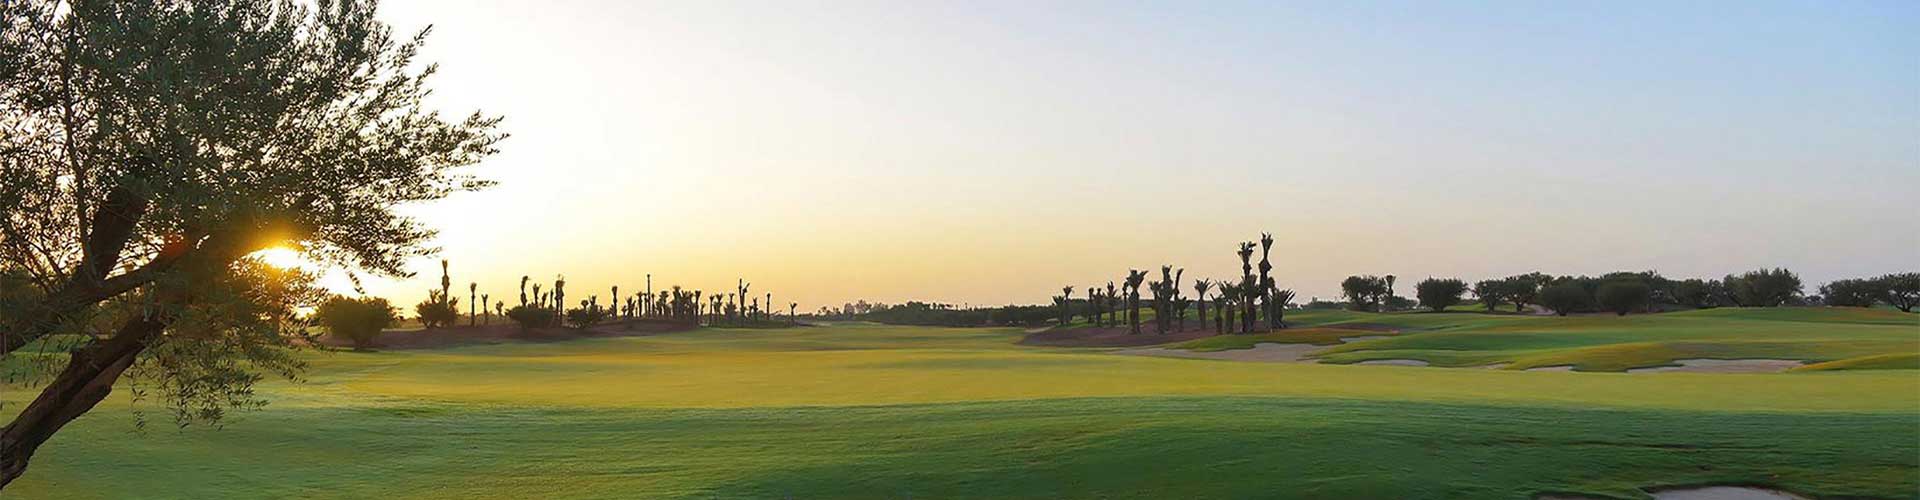 Golf hoteles all inclusive marrakech